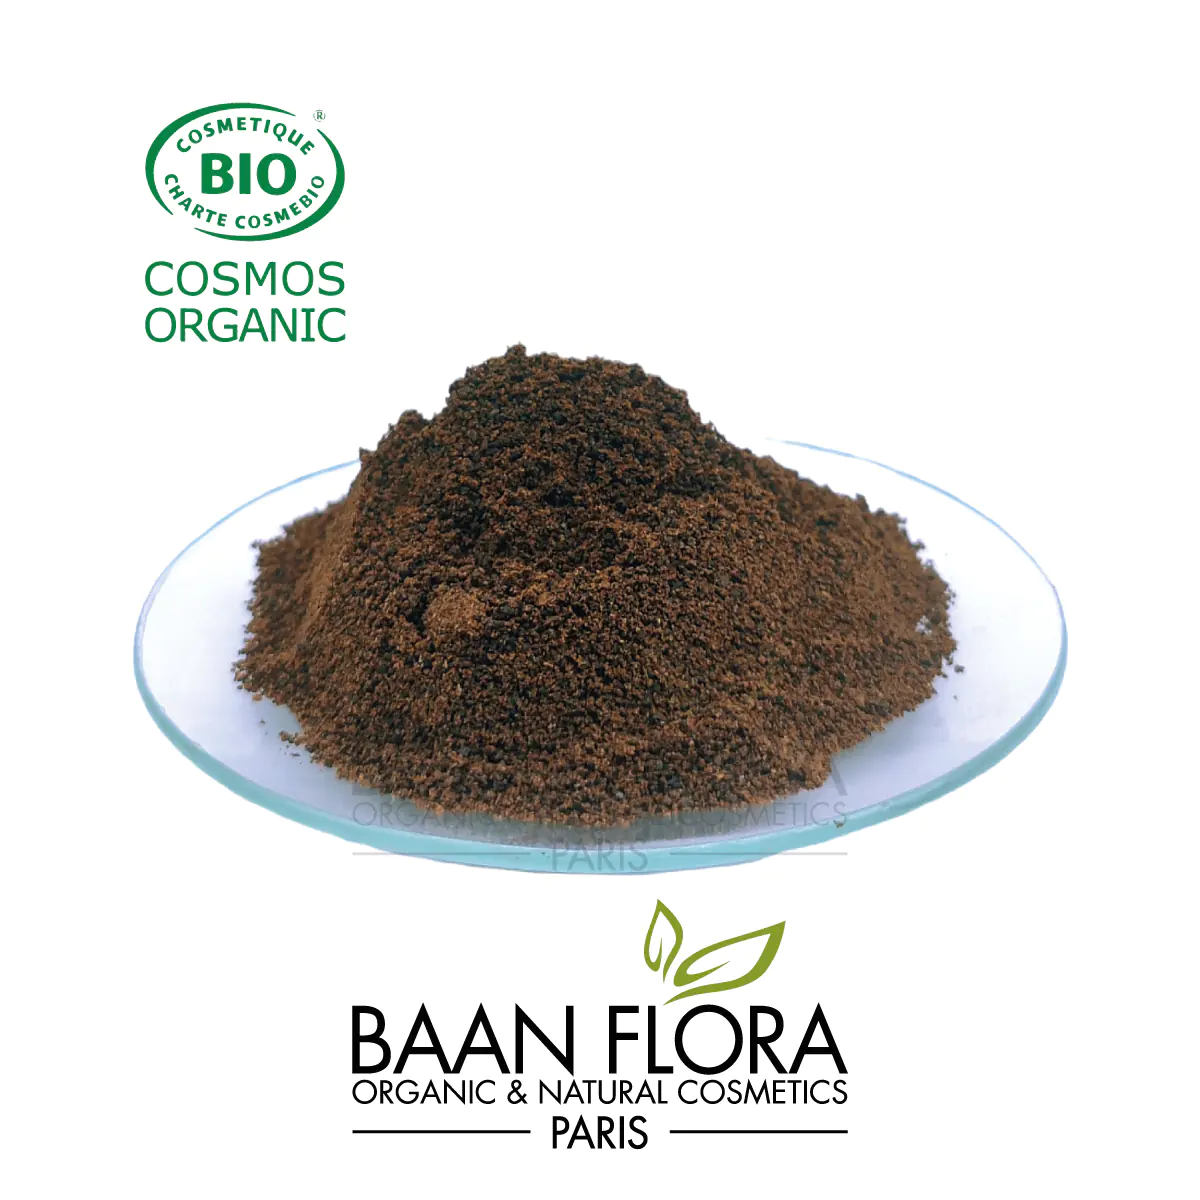 exfoliant feves de cafe bio en poudre baan flora